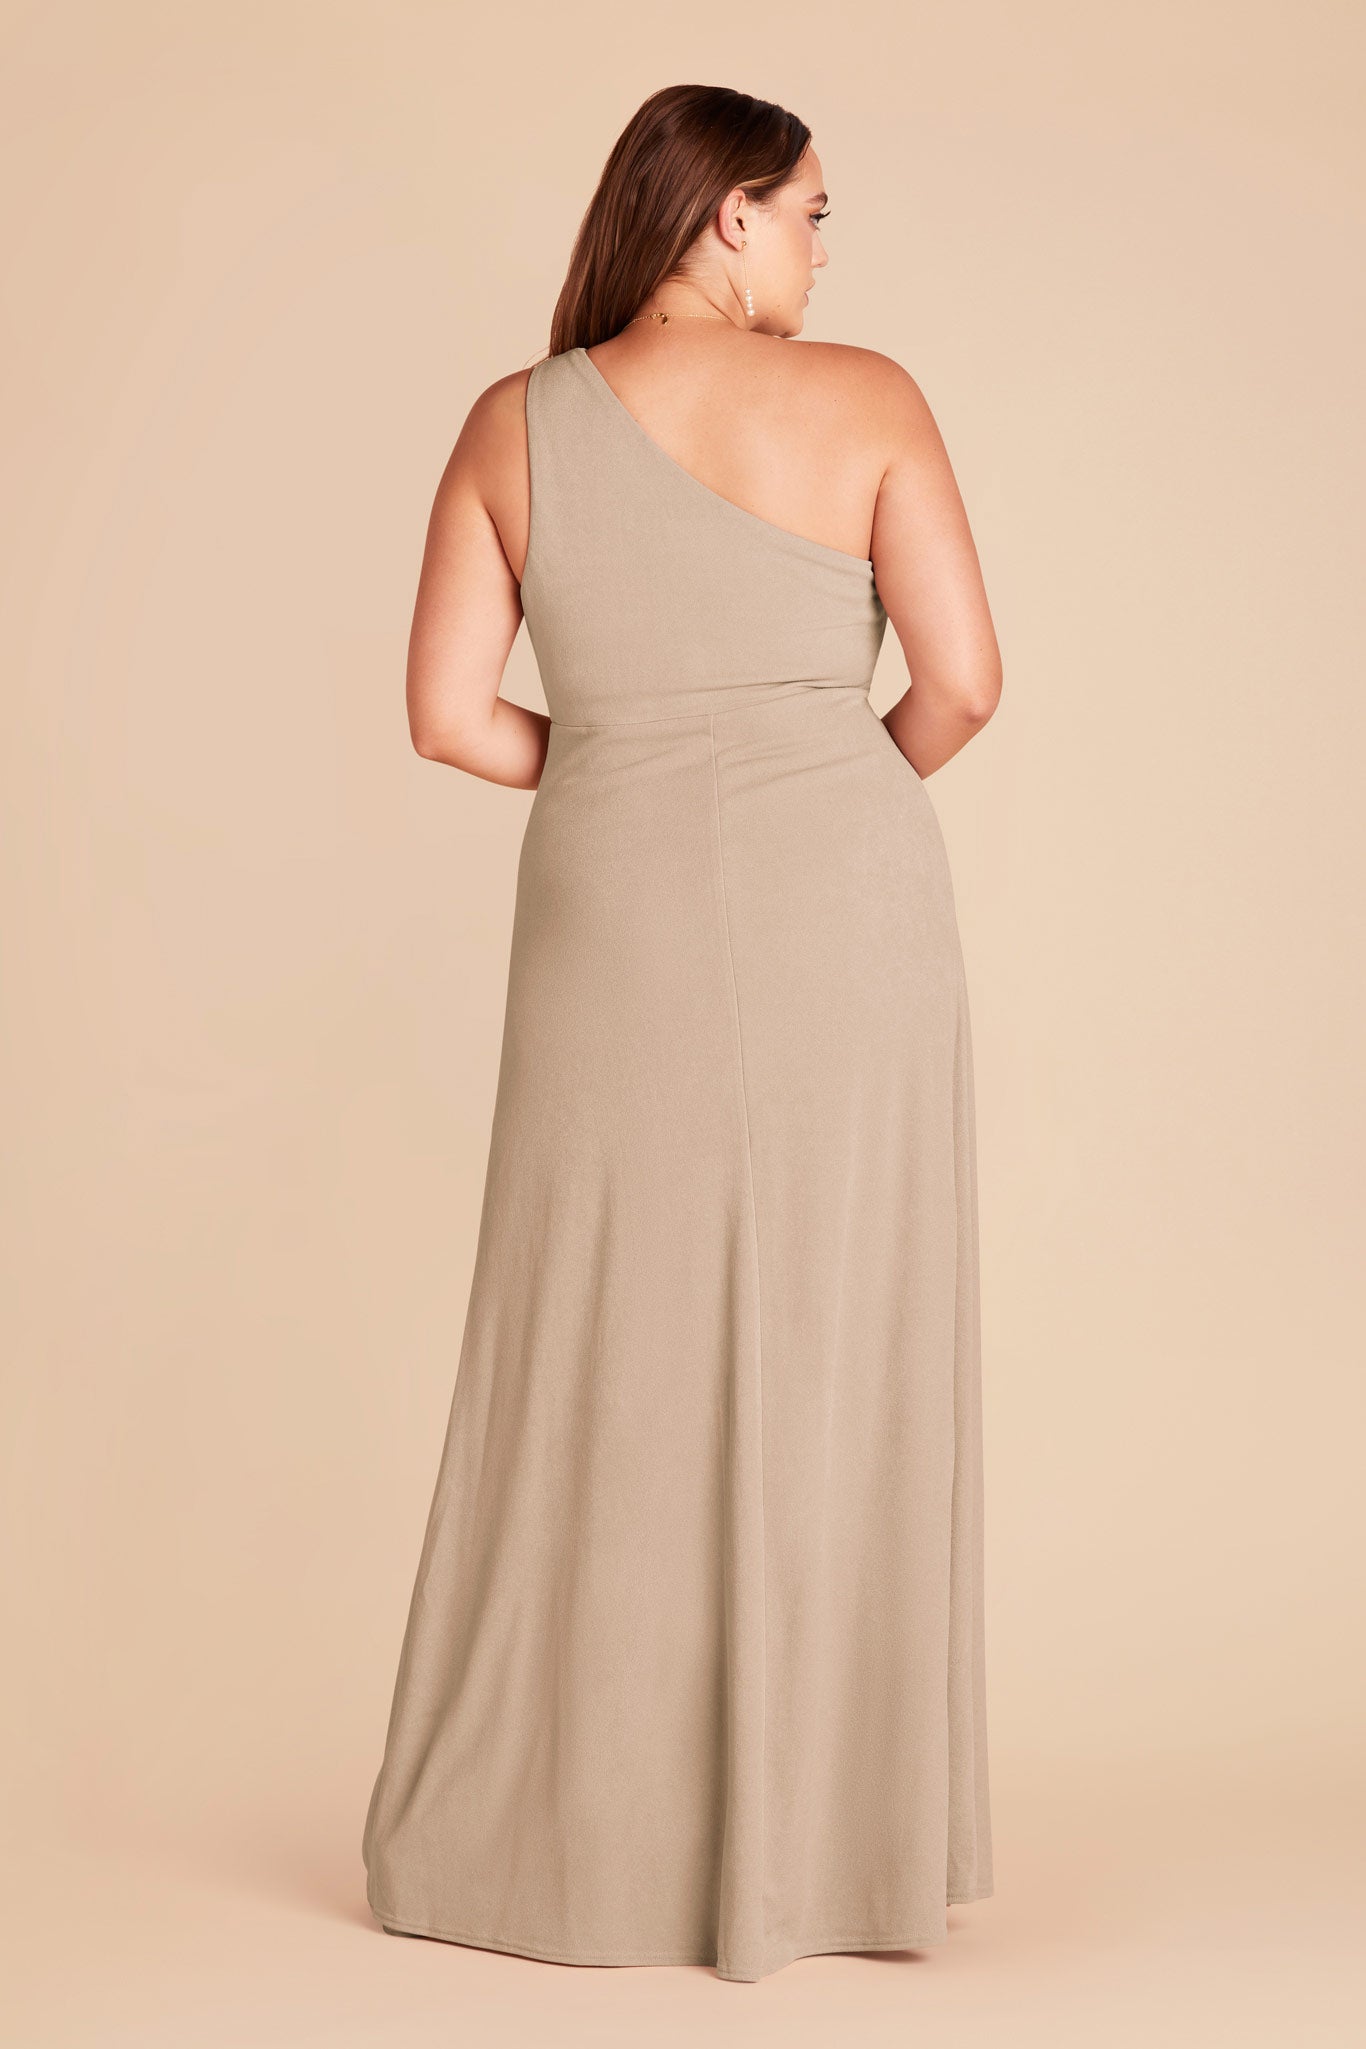 Almond Kira Crepe Dress by Birdy Grey